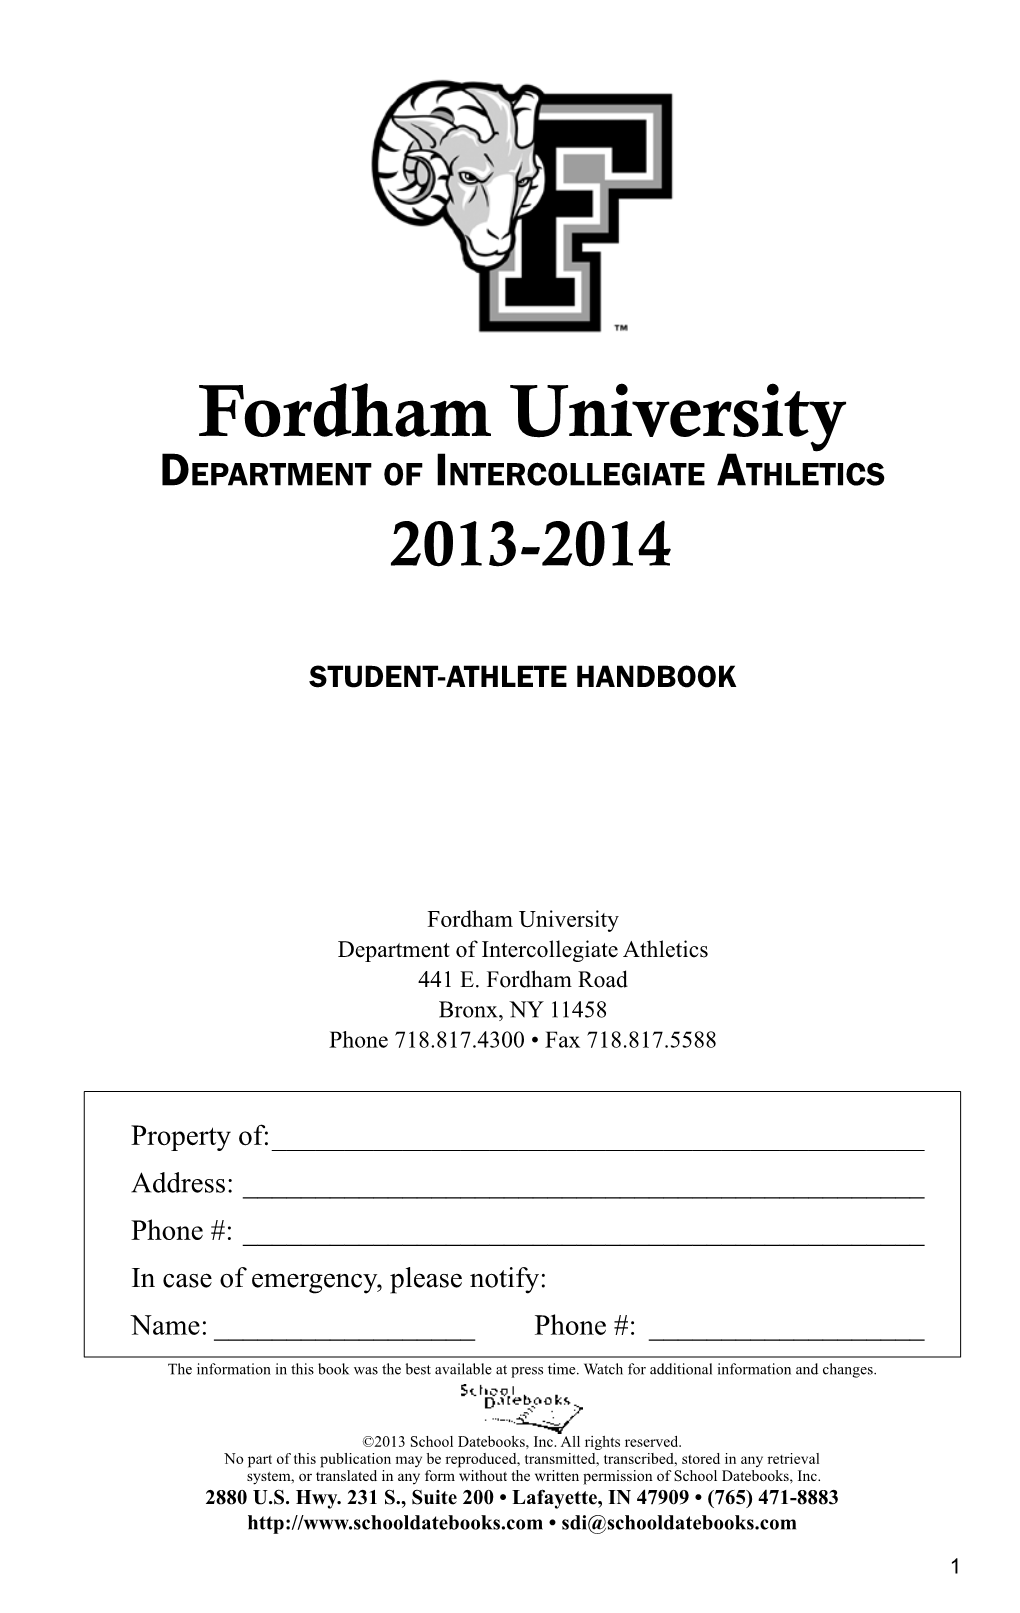 Fordham University Athletics Representatives, to Provide Transportation for the Prospective Recruit